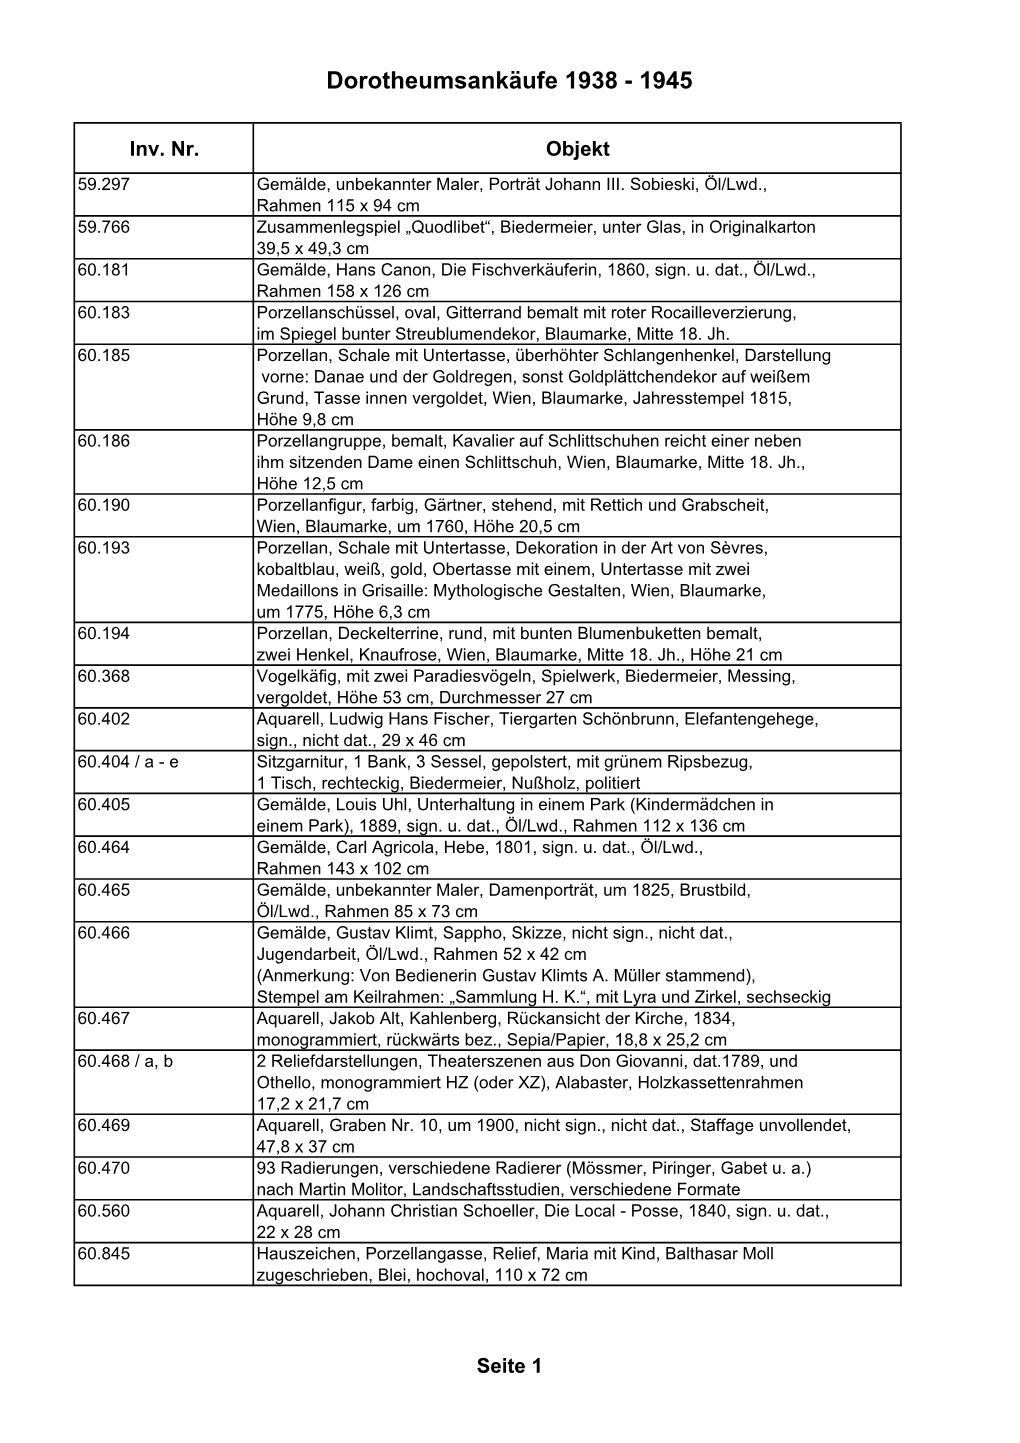 List of Objects As Pdf-Download (In German